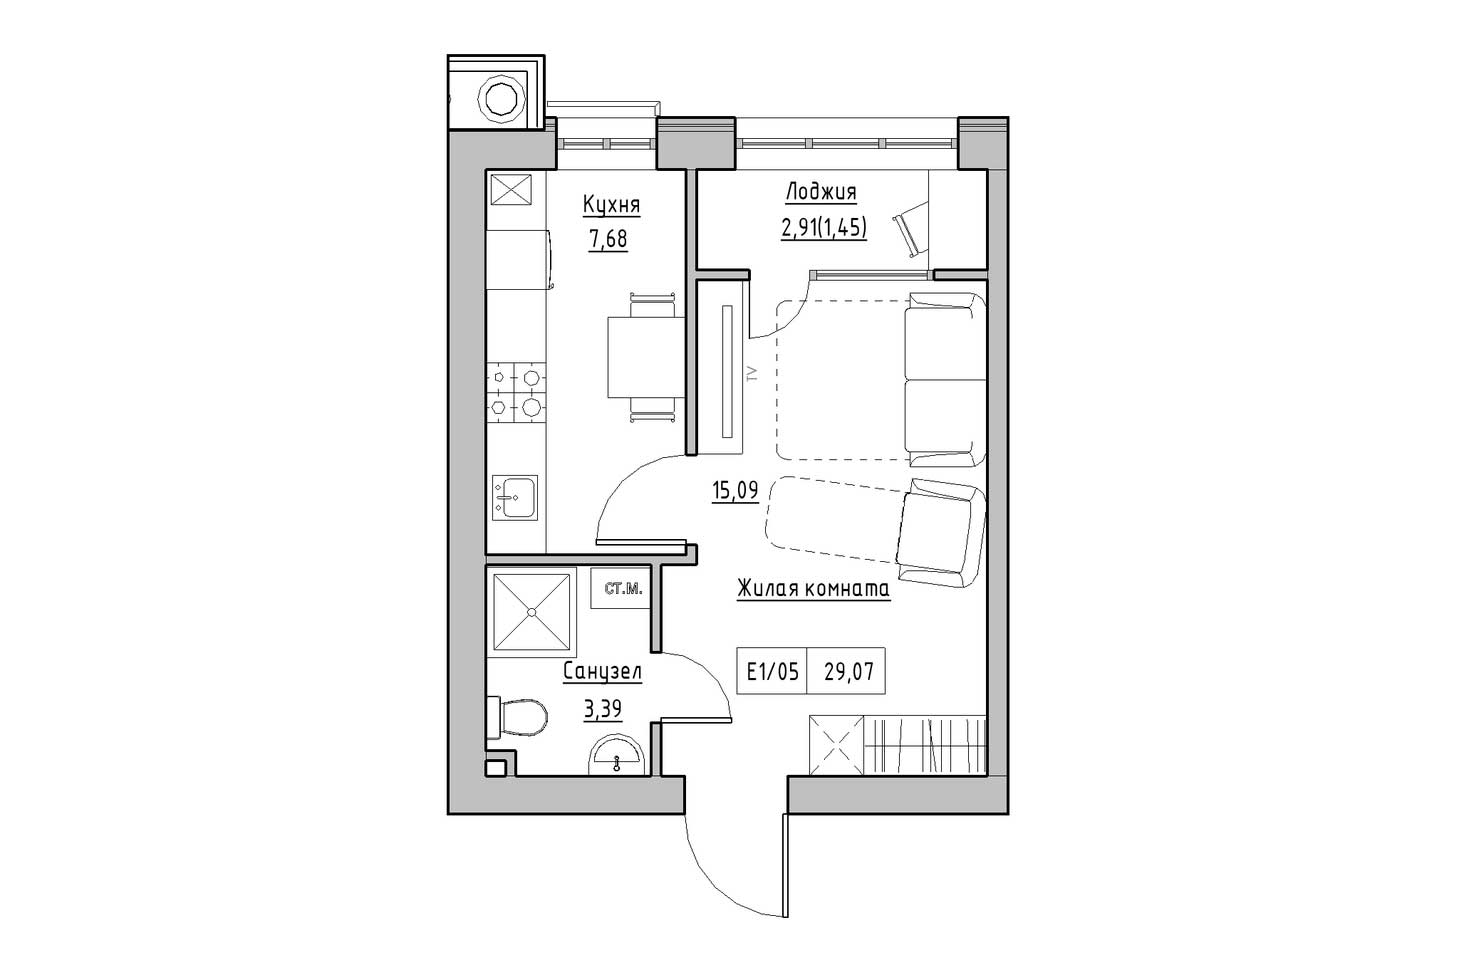 Planning 1-rm flats area 29.07m2, KS-009-01/0007.